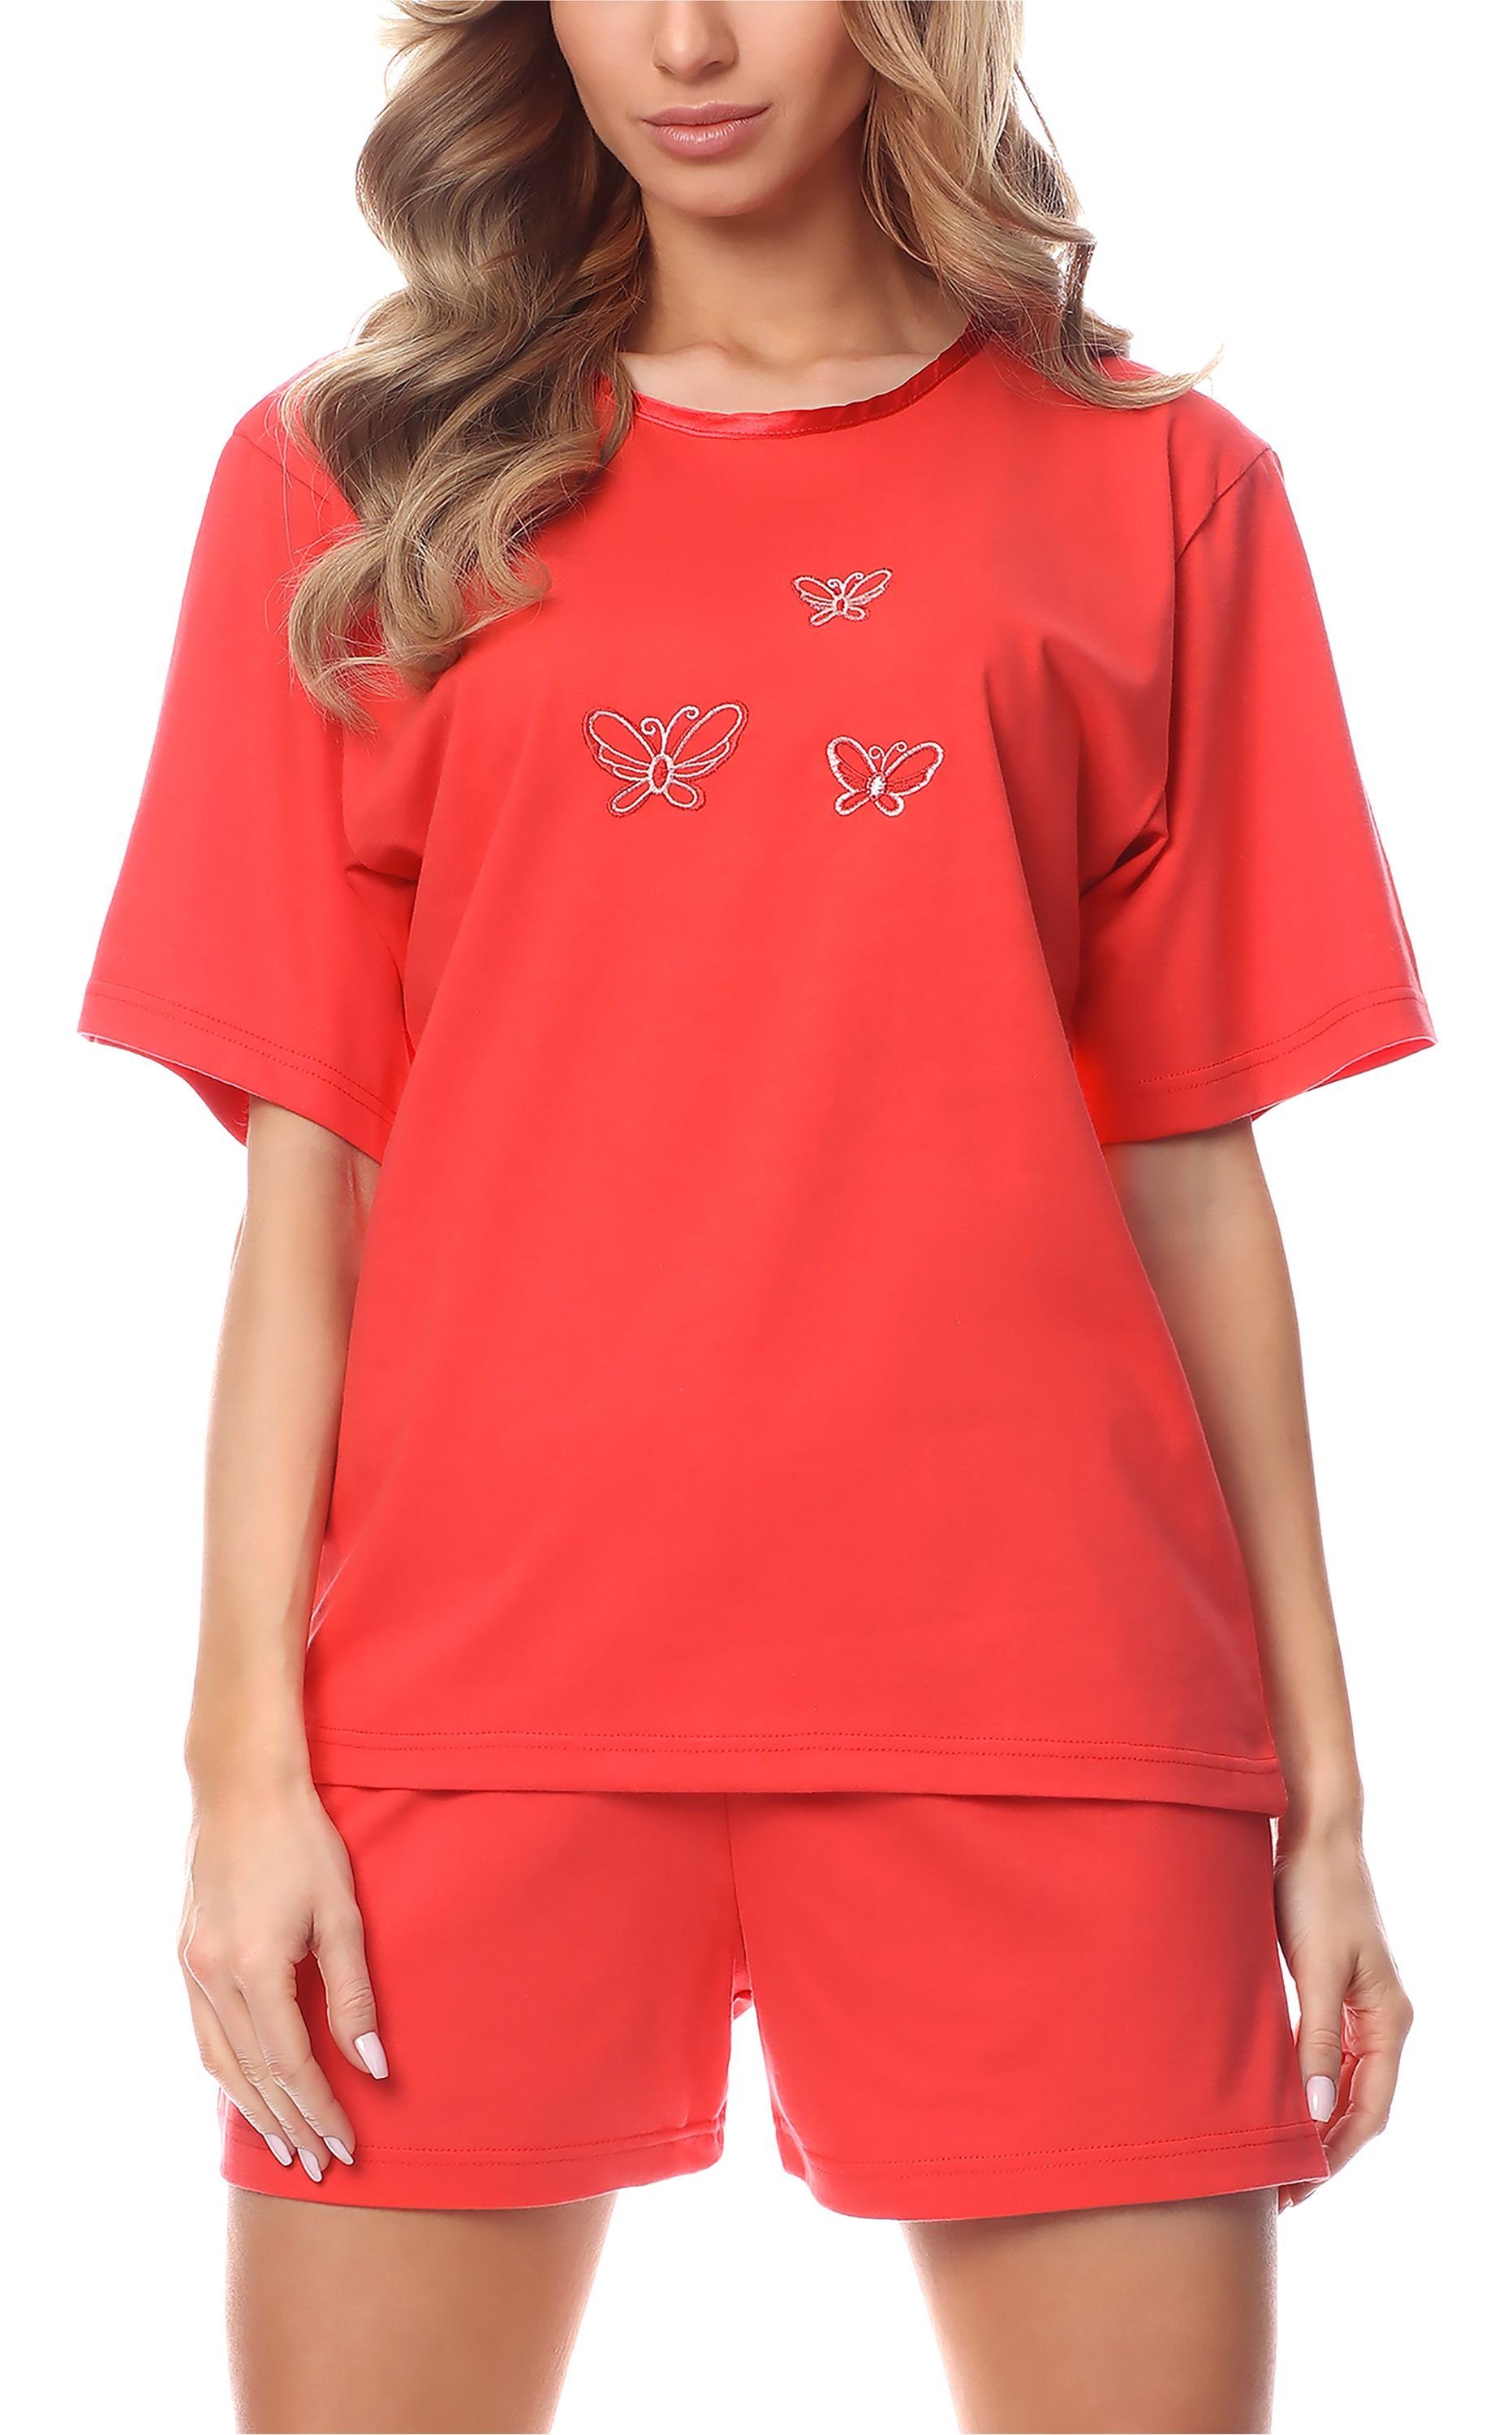 Merry Style Schlafanzug Damen Kurzarm Schlafanzug 91LW1 Coral (Kurzarm)